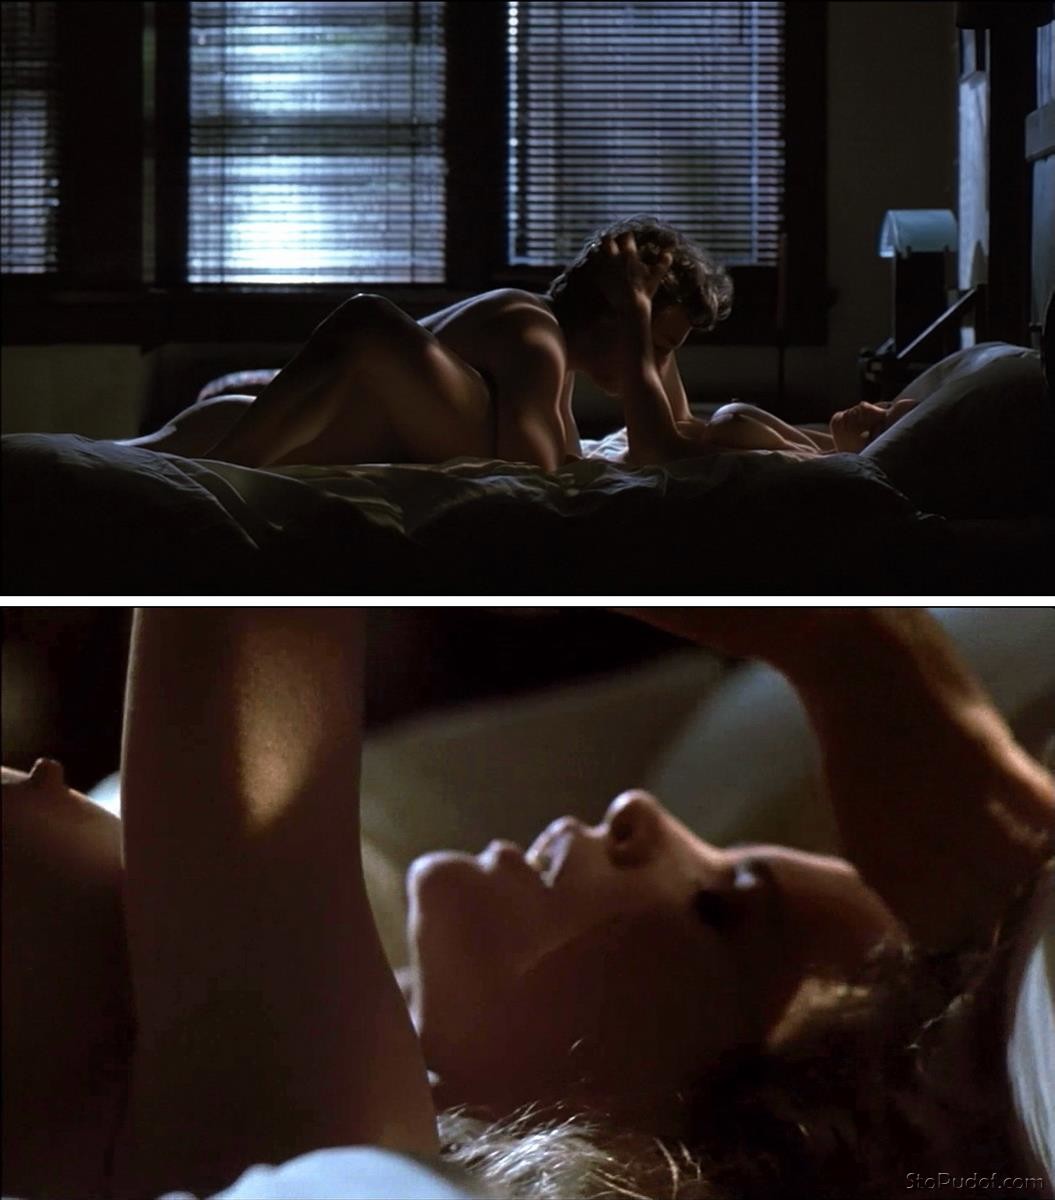 leaked nudes of Kim Basinger uncensored - UkPhotoSafari